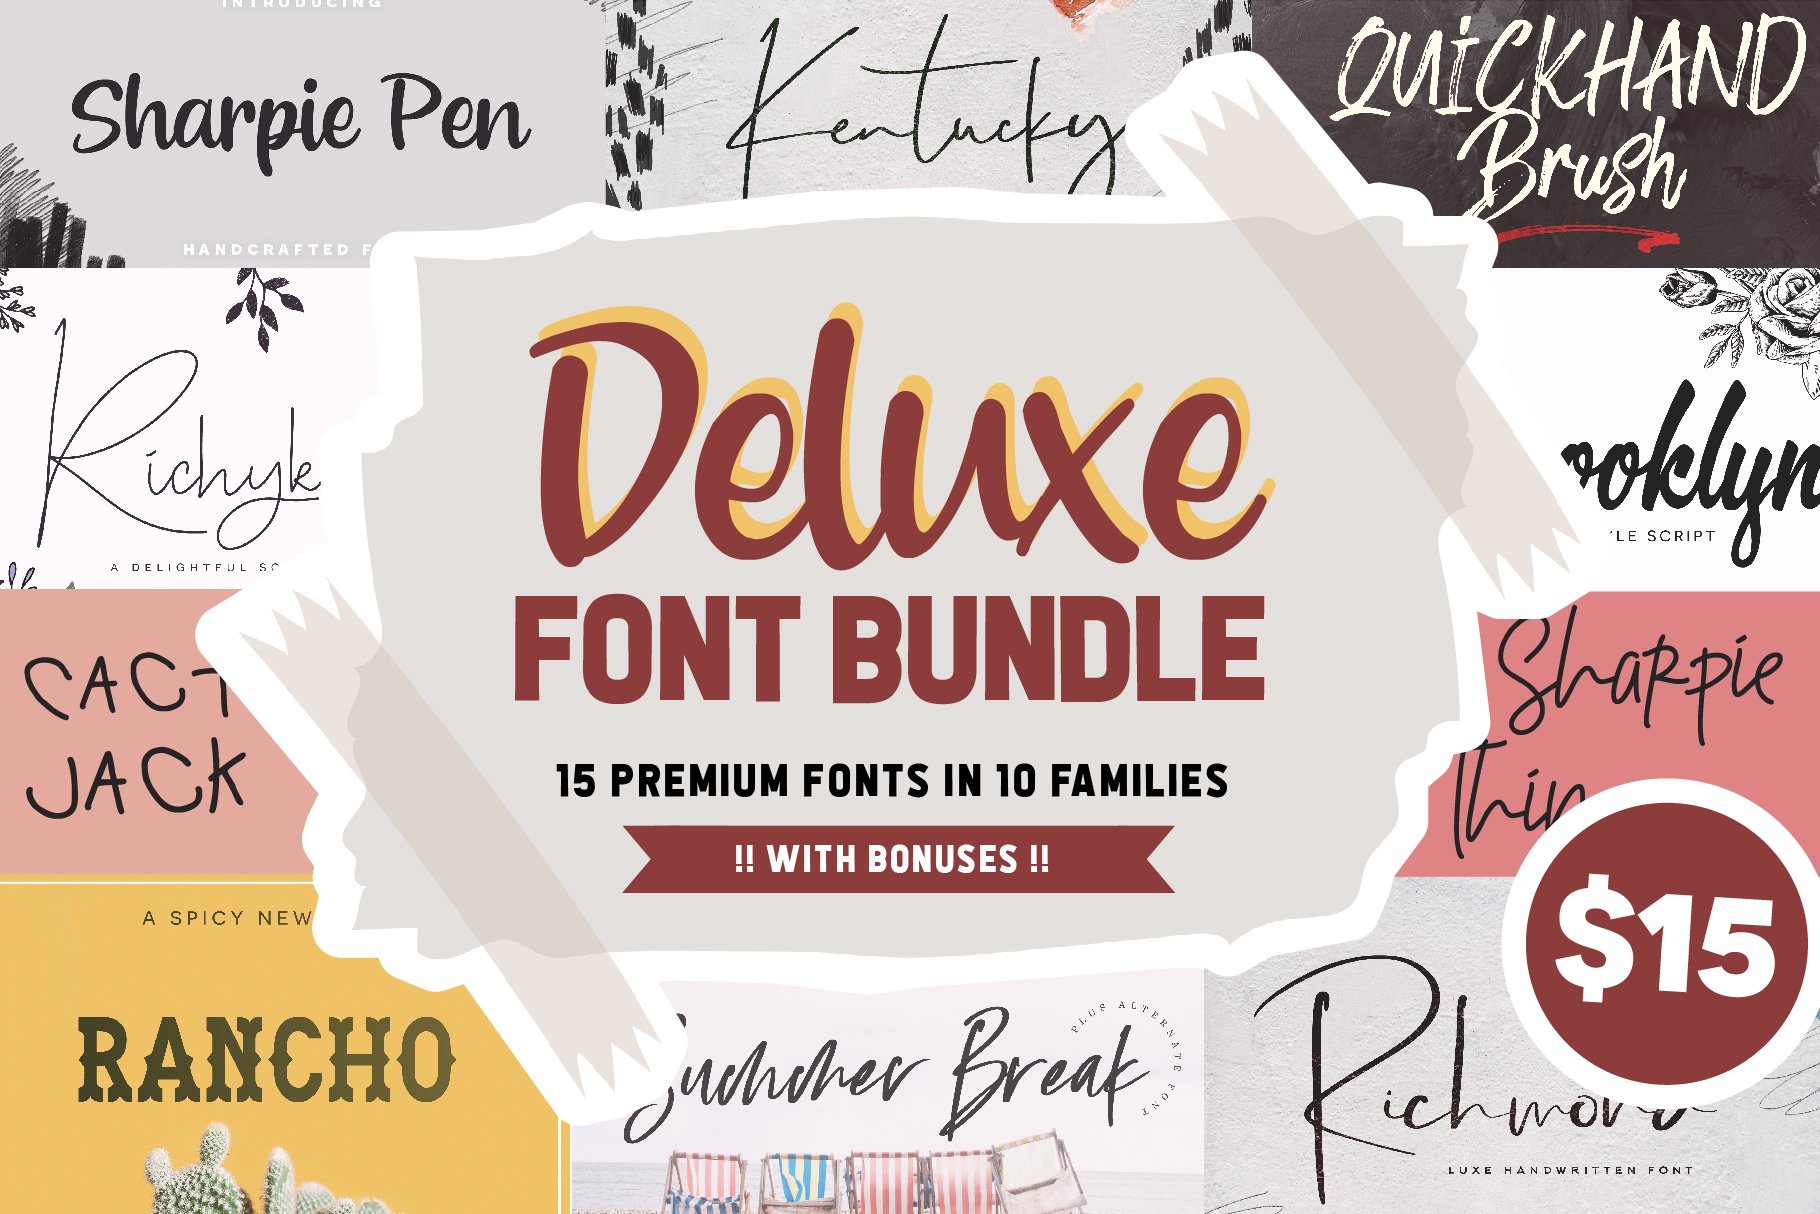 Deluxe Font Bundle + Bonuses cover image.